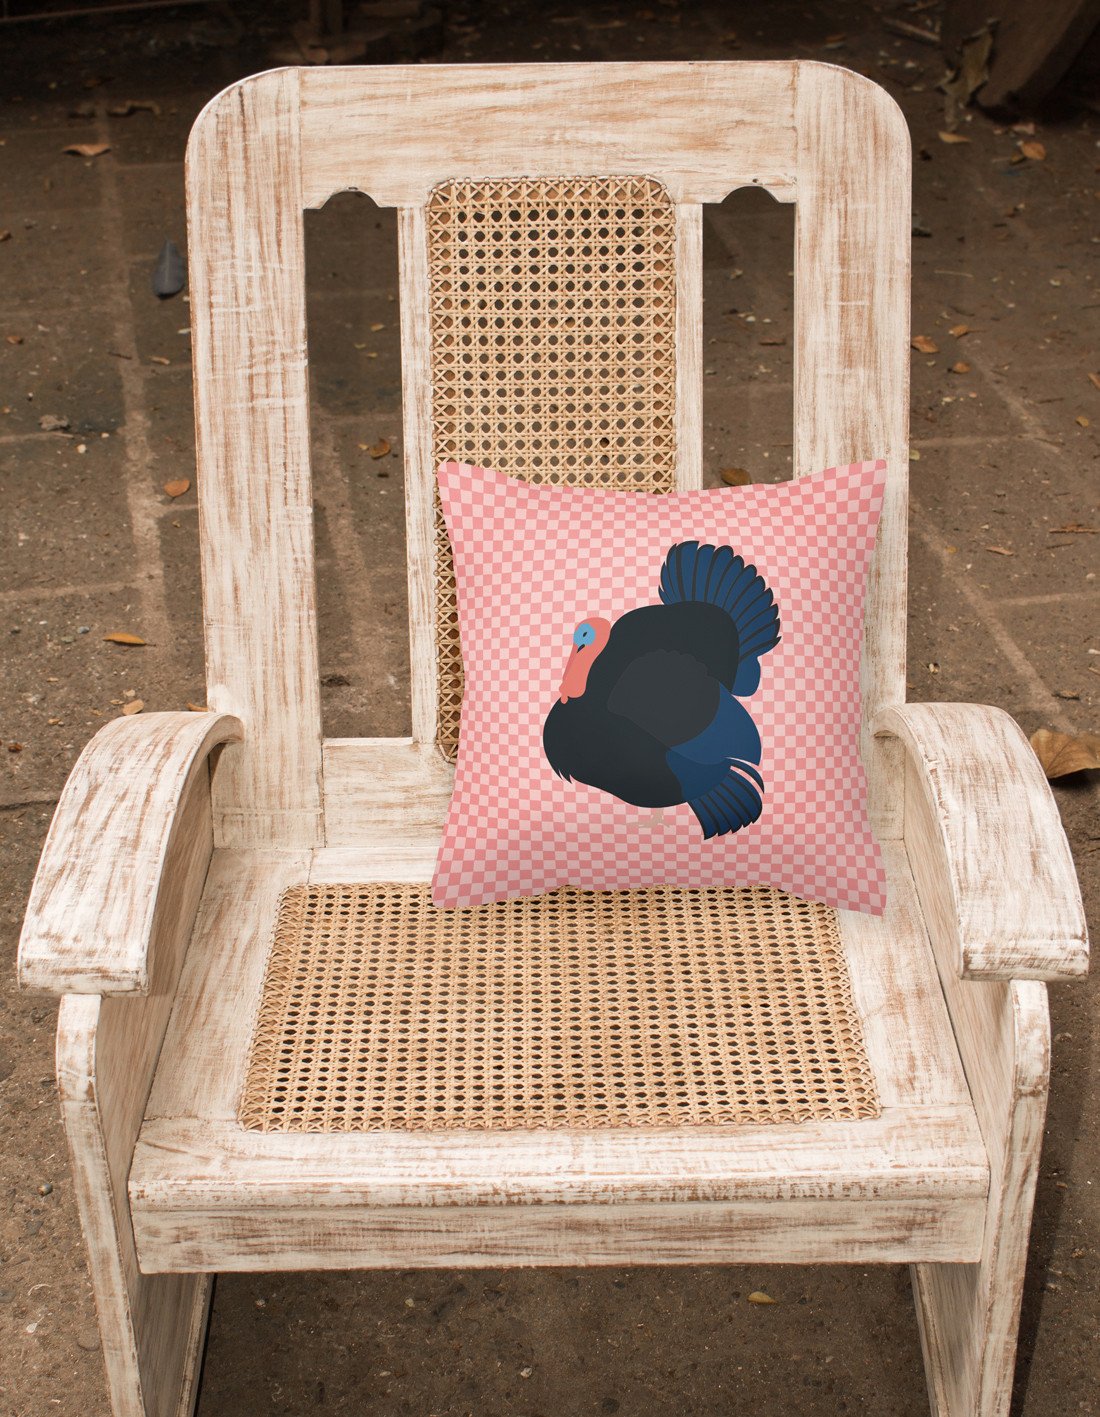 Norfolk Black Turkey Pink Check Fabric Decorative Pillow BB7985PW1818 by Caroline's Treasures